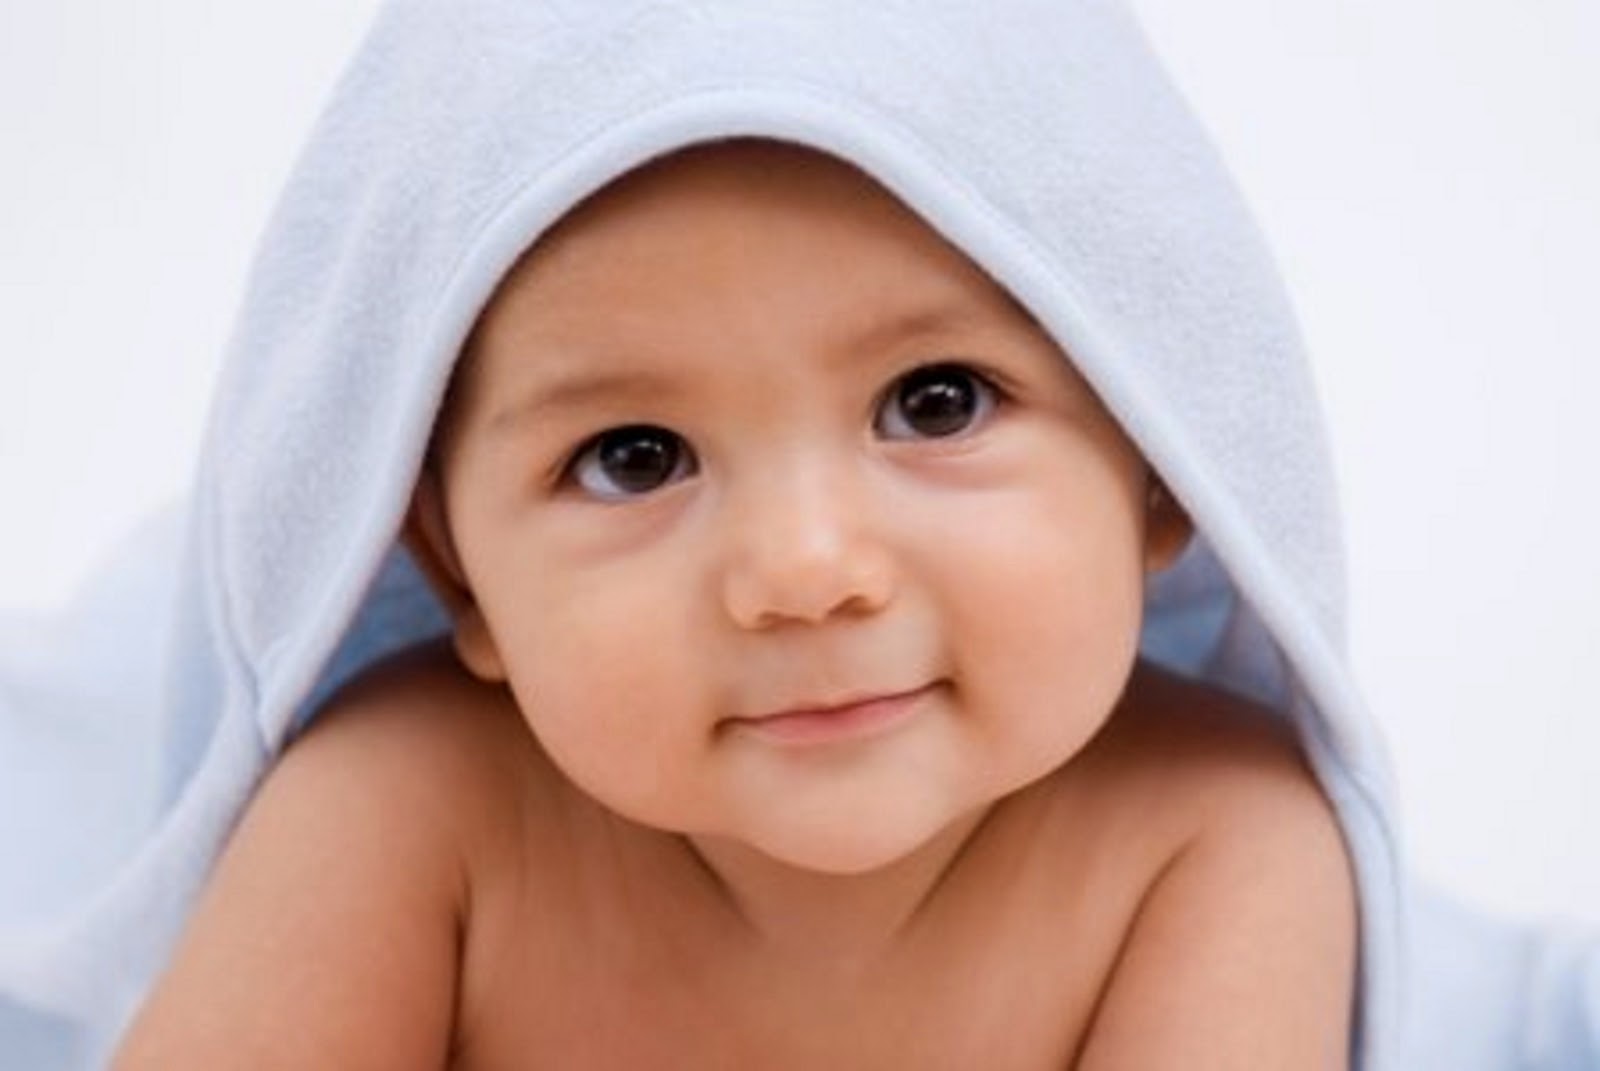 Gambar Anak Bayi Paling Lucu Terbaru DP BBM Update